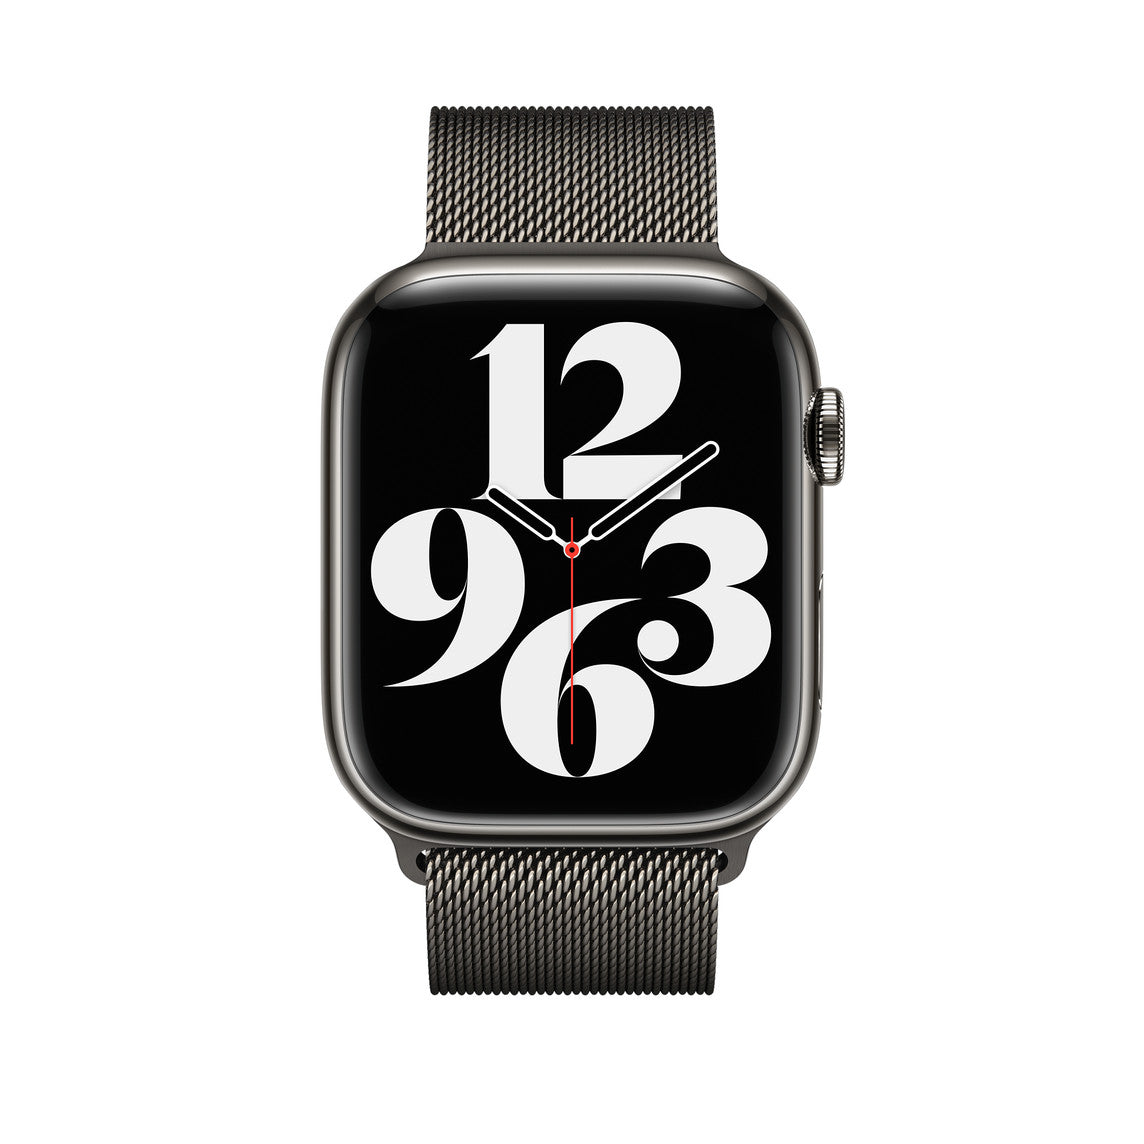 -lebanon-beirut-warranty-sale-shop-shopping-prices in lebanon-apple-apple prices in lebanon-watch-smartwatch-watches prices in lebanon-